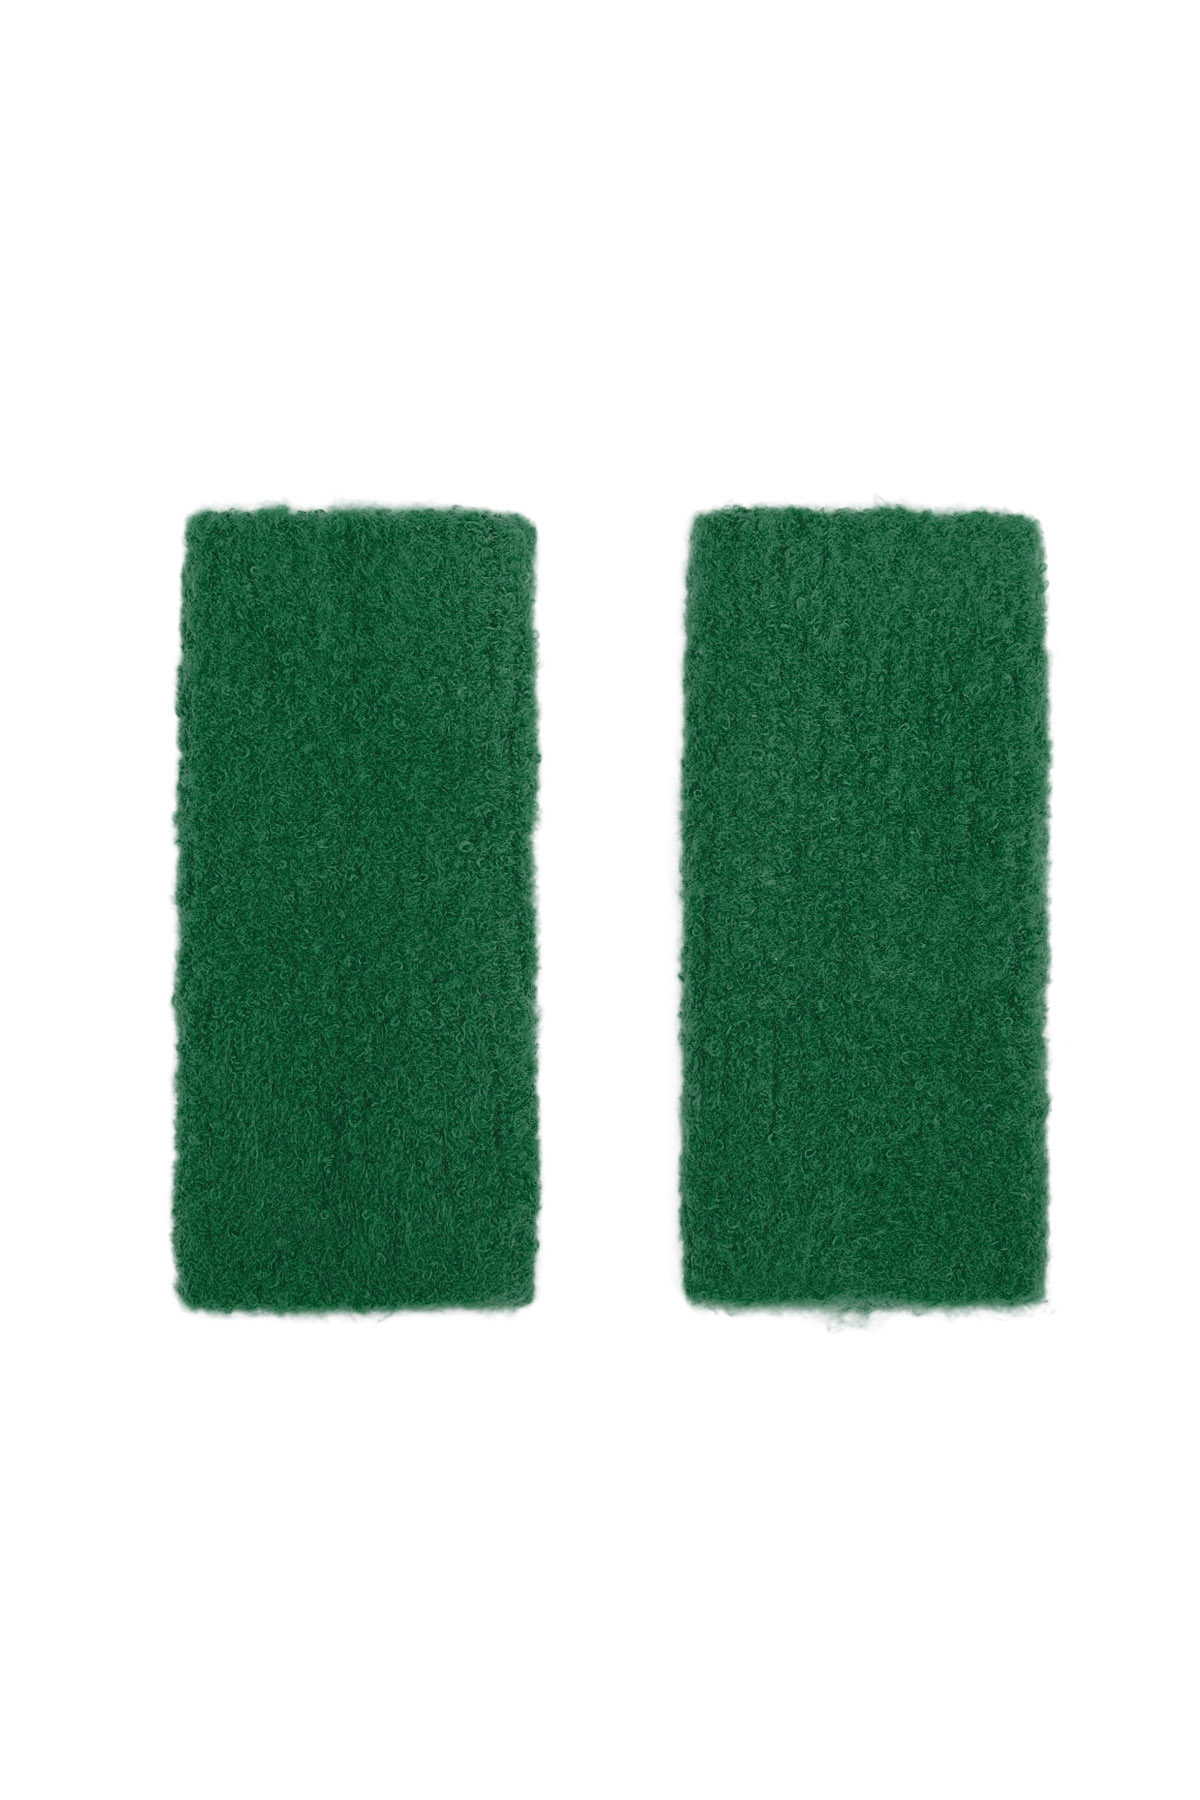 Delikli eldiven - koyu yeşil h5 Resim3